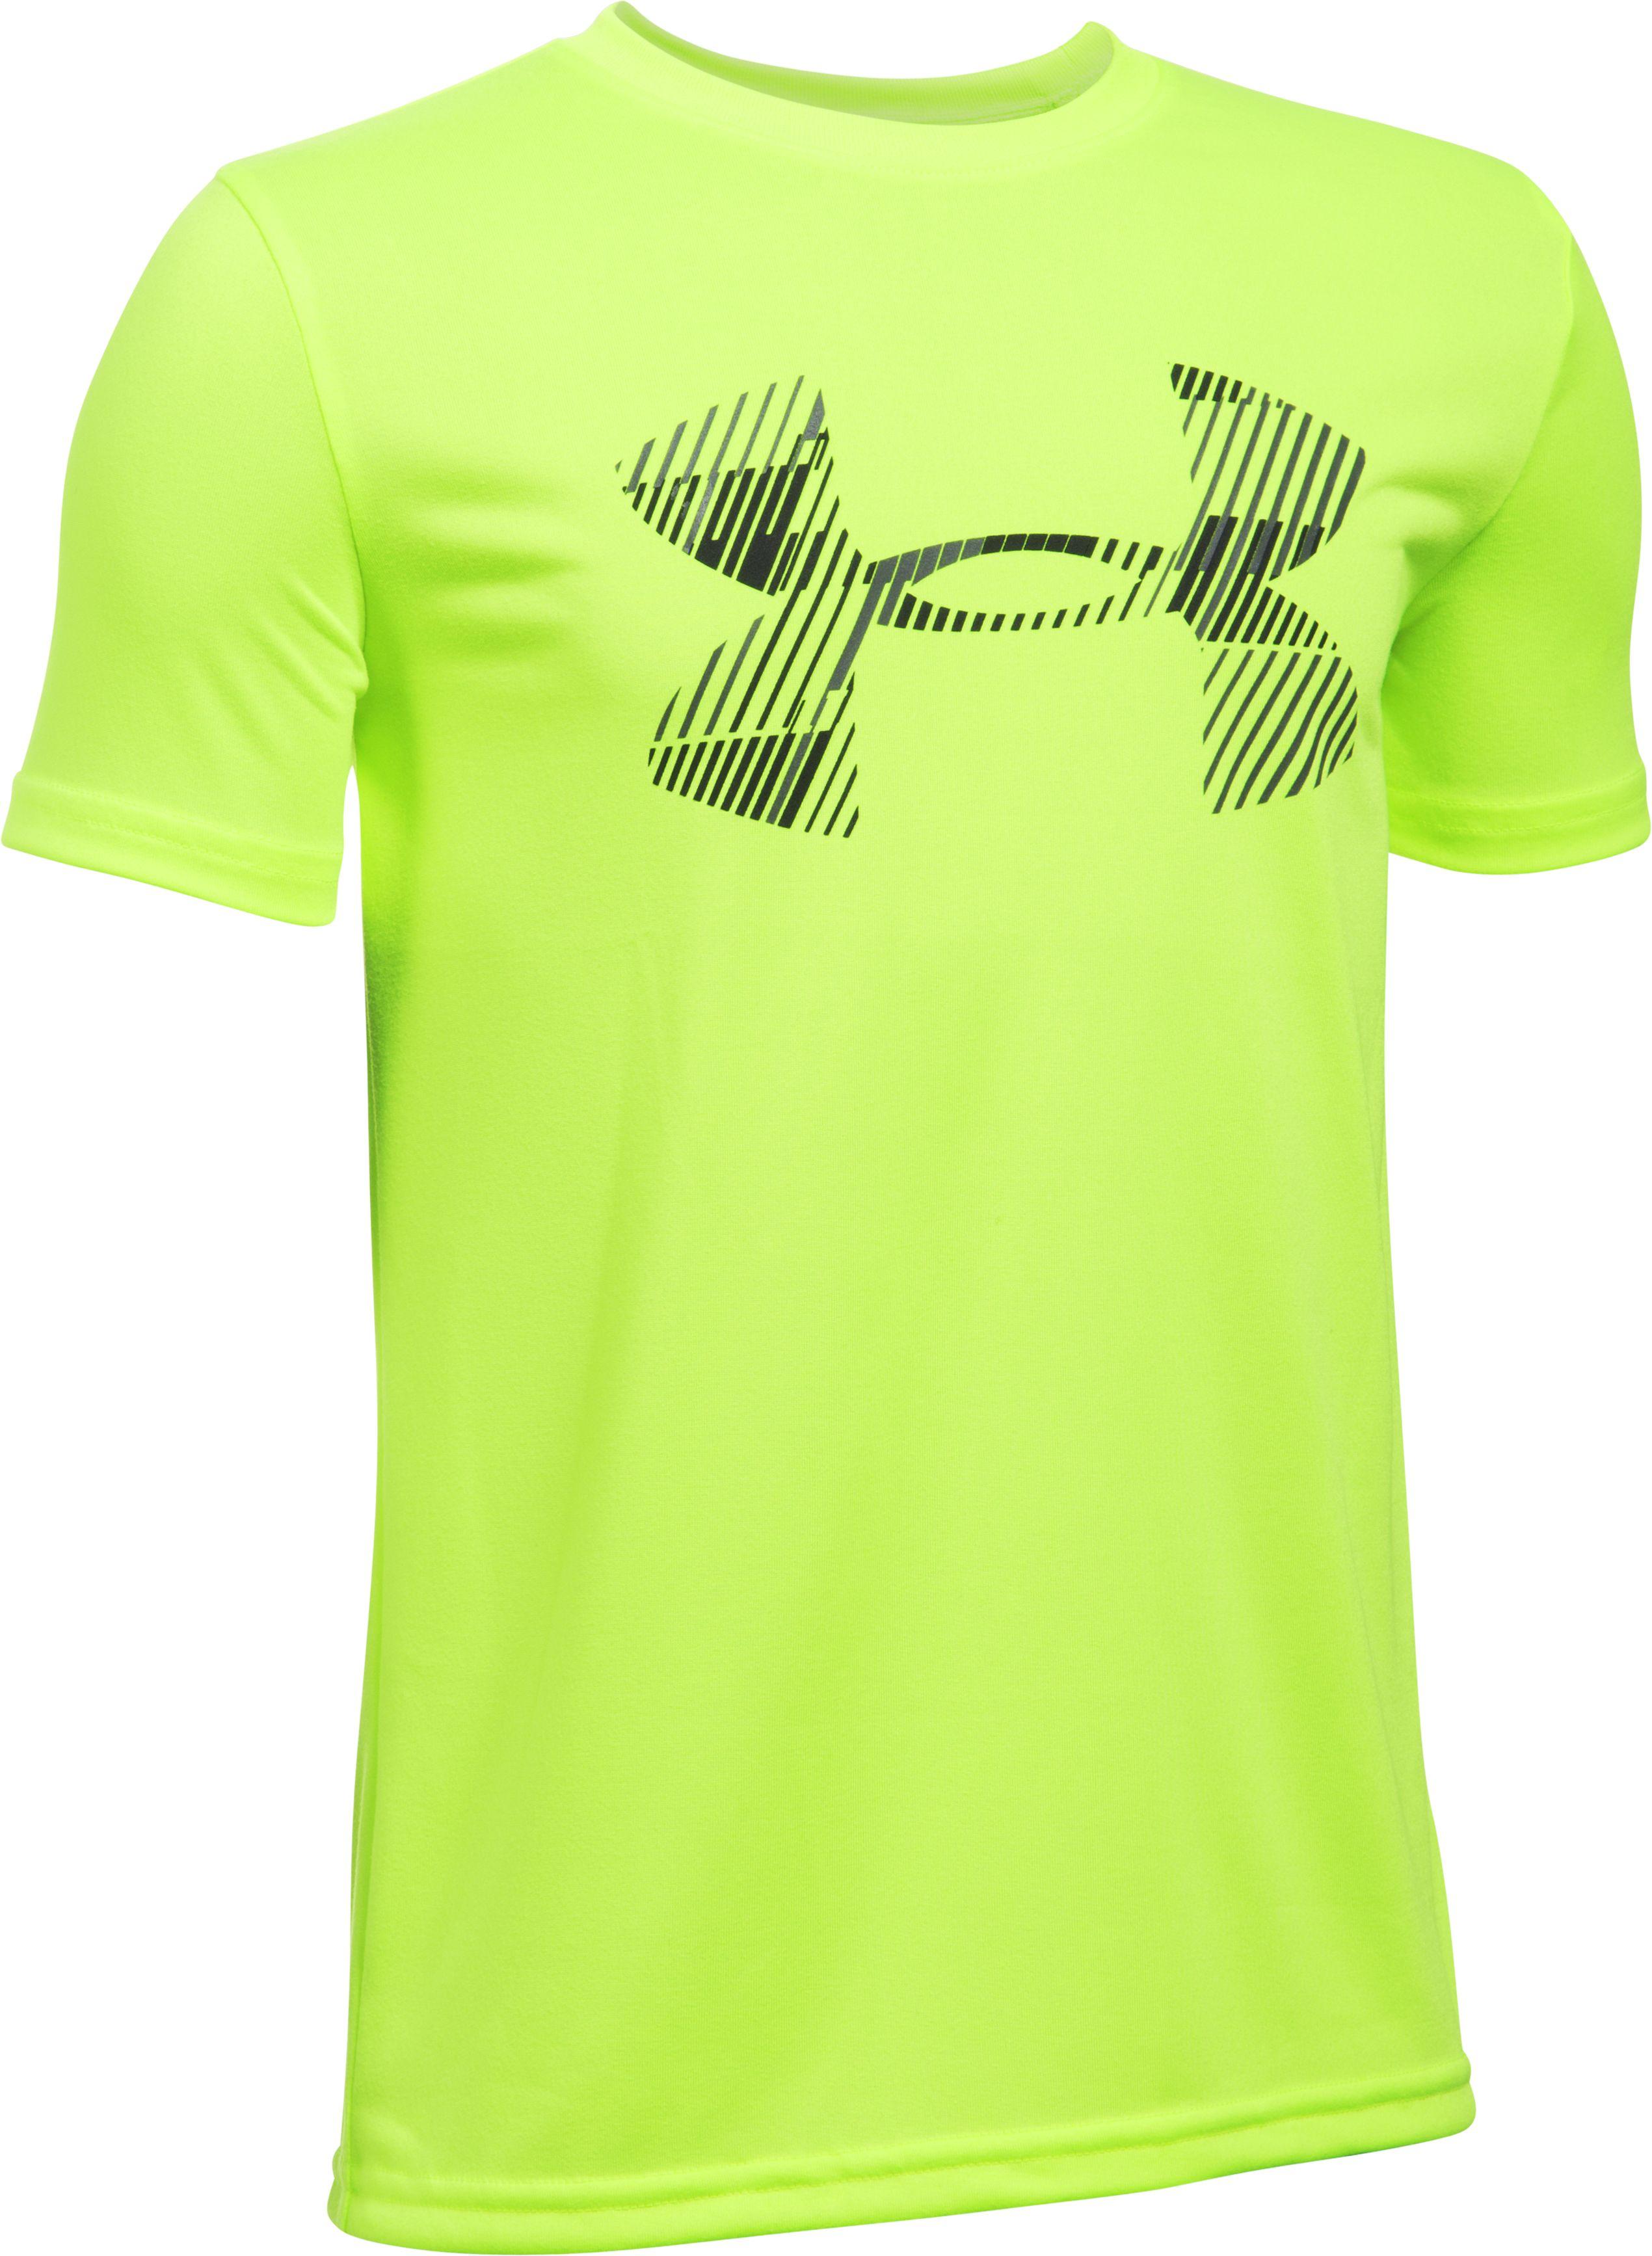 Top Green Logo - Under Armour Combo Logo Short Sleeve Junior Running Top - Green | eBay